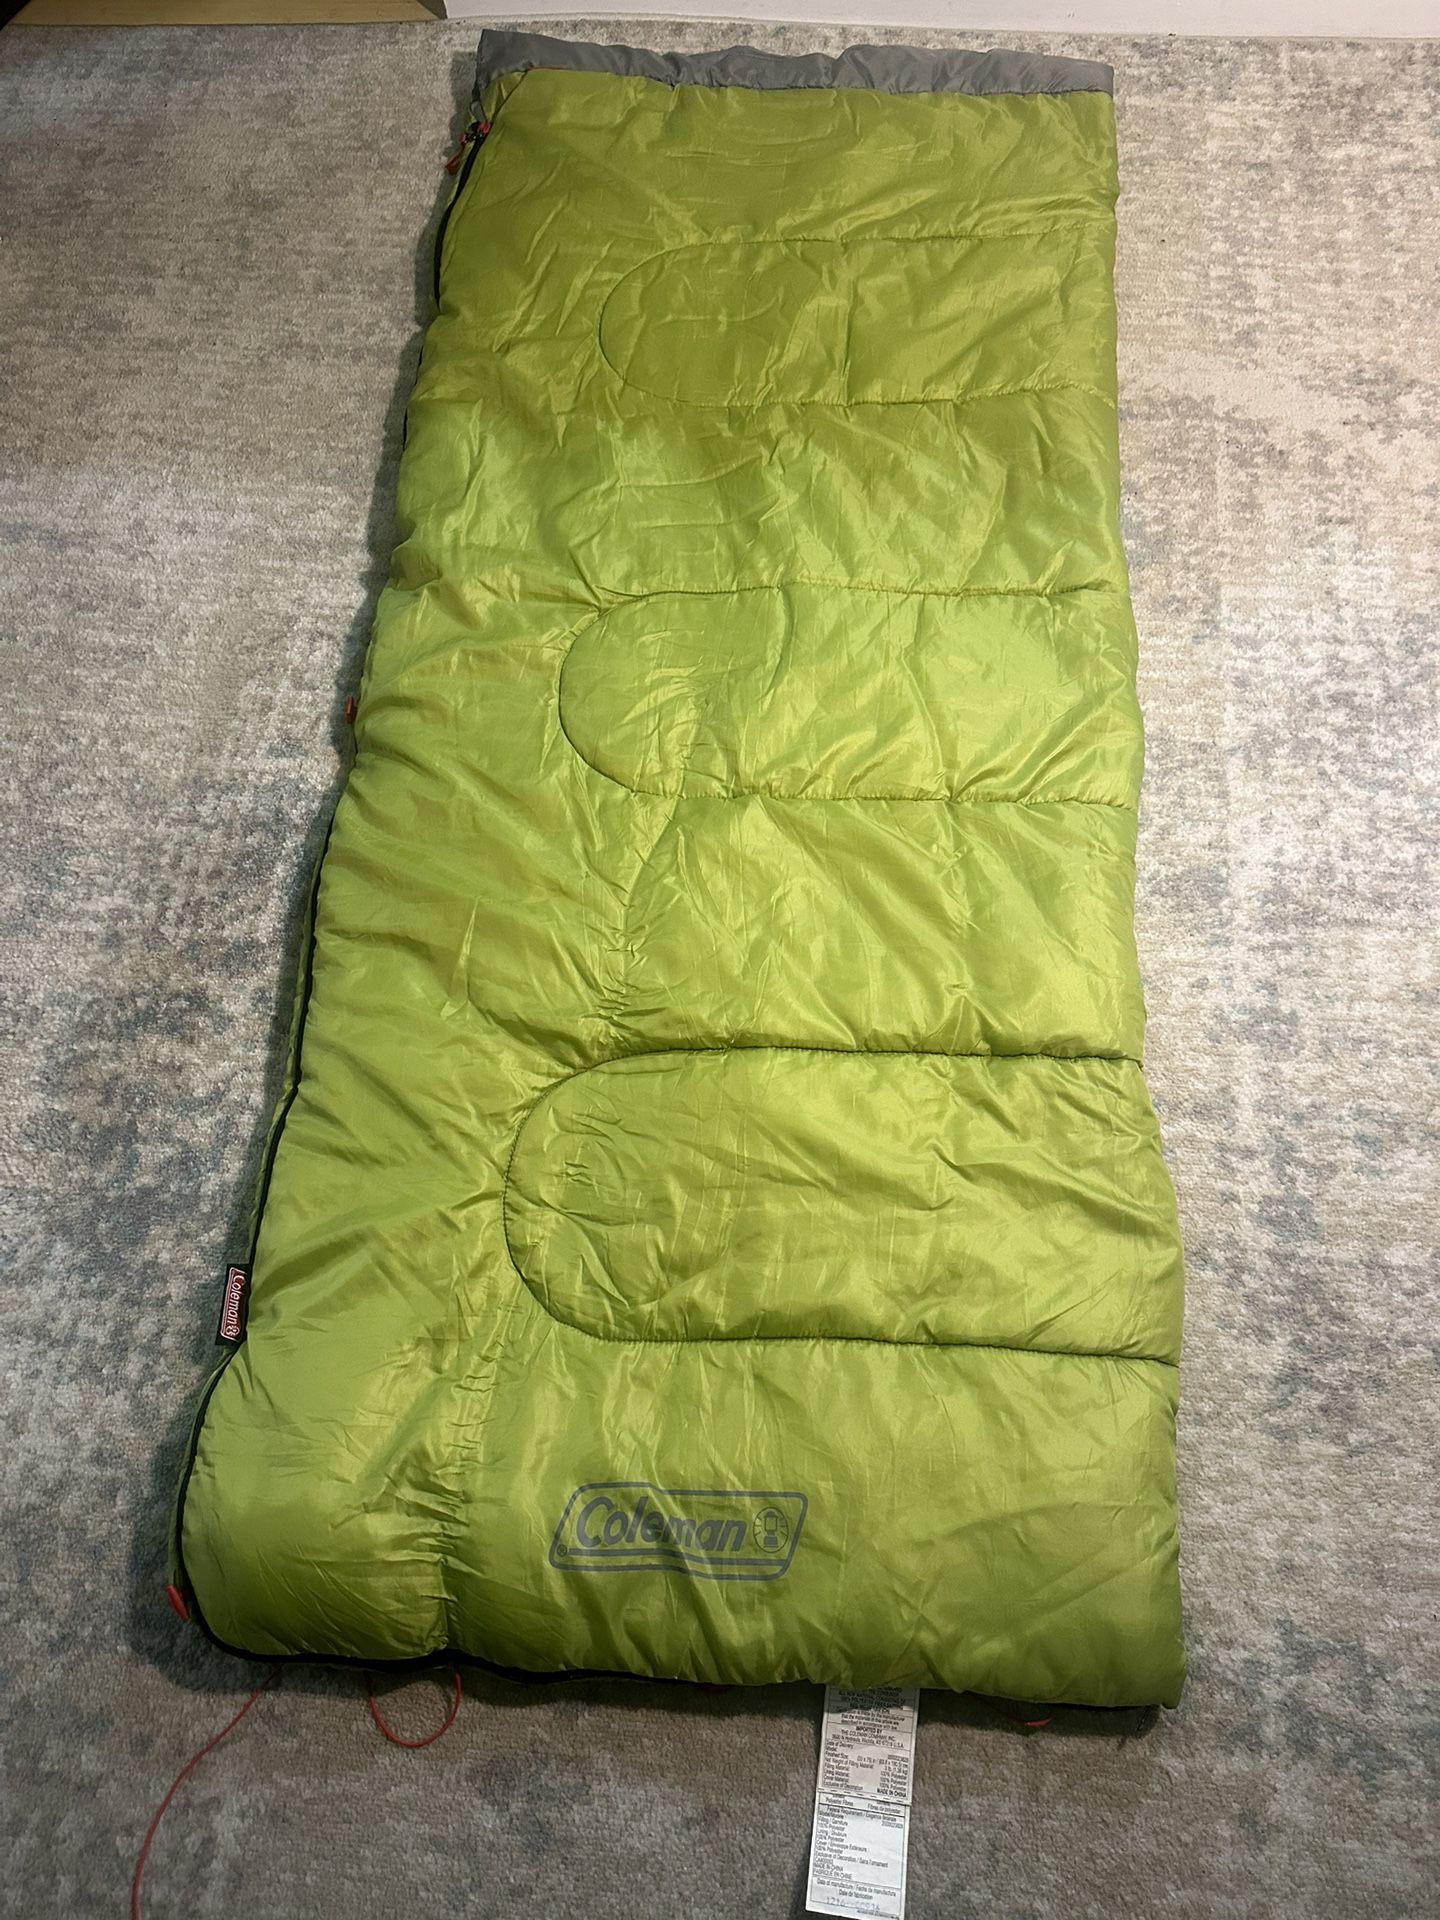 Coleman 40 F Rectangular Sleeping Bag - $20 OBO